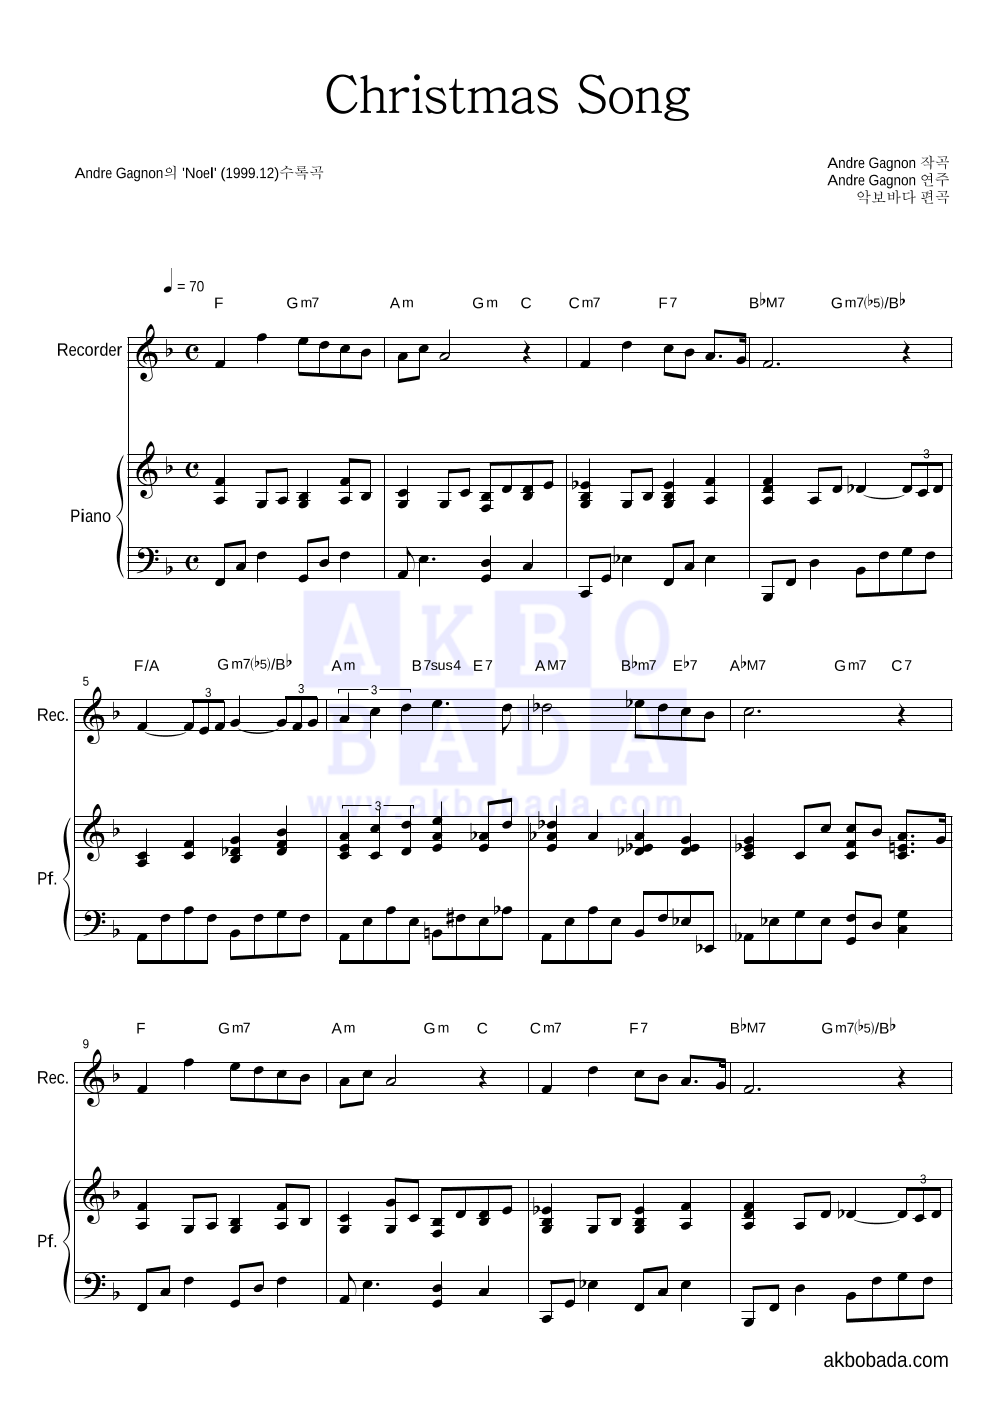 Andre Gagnon - Christmas Song 리코더&피아노 악보 